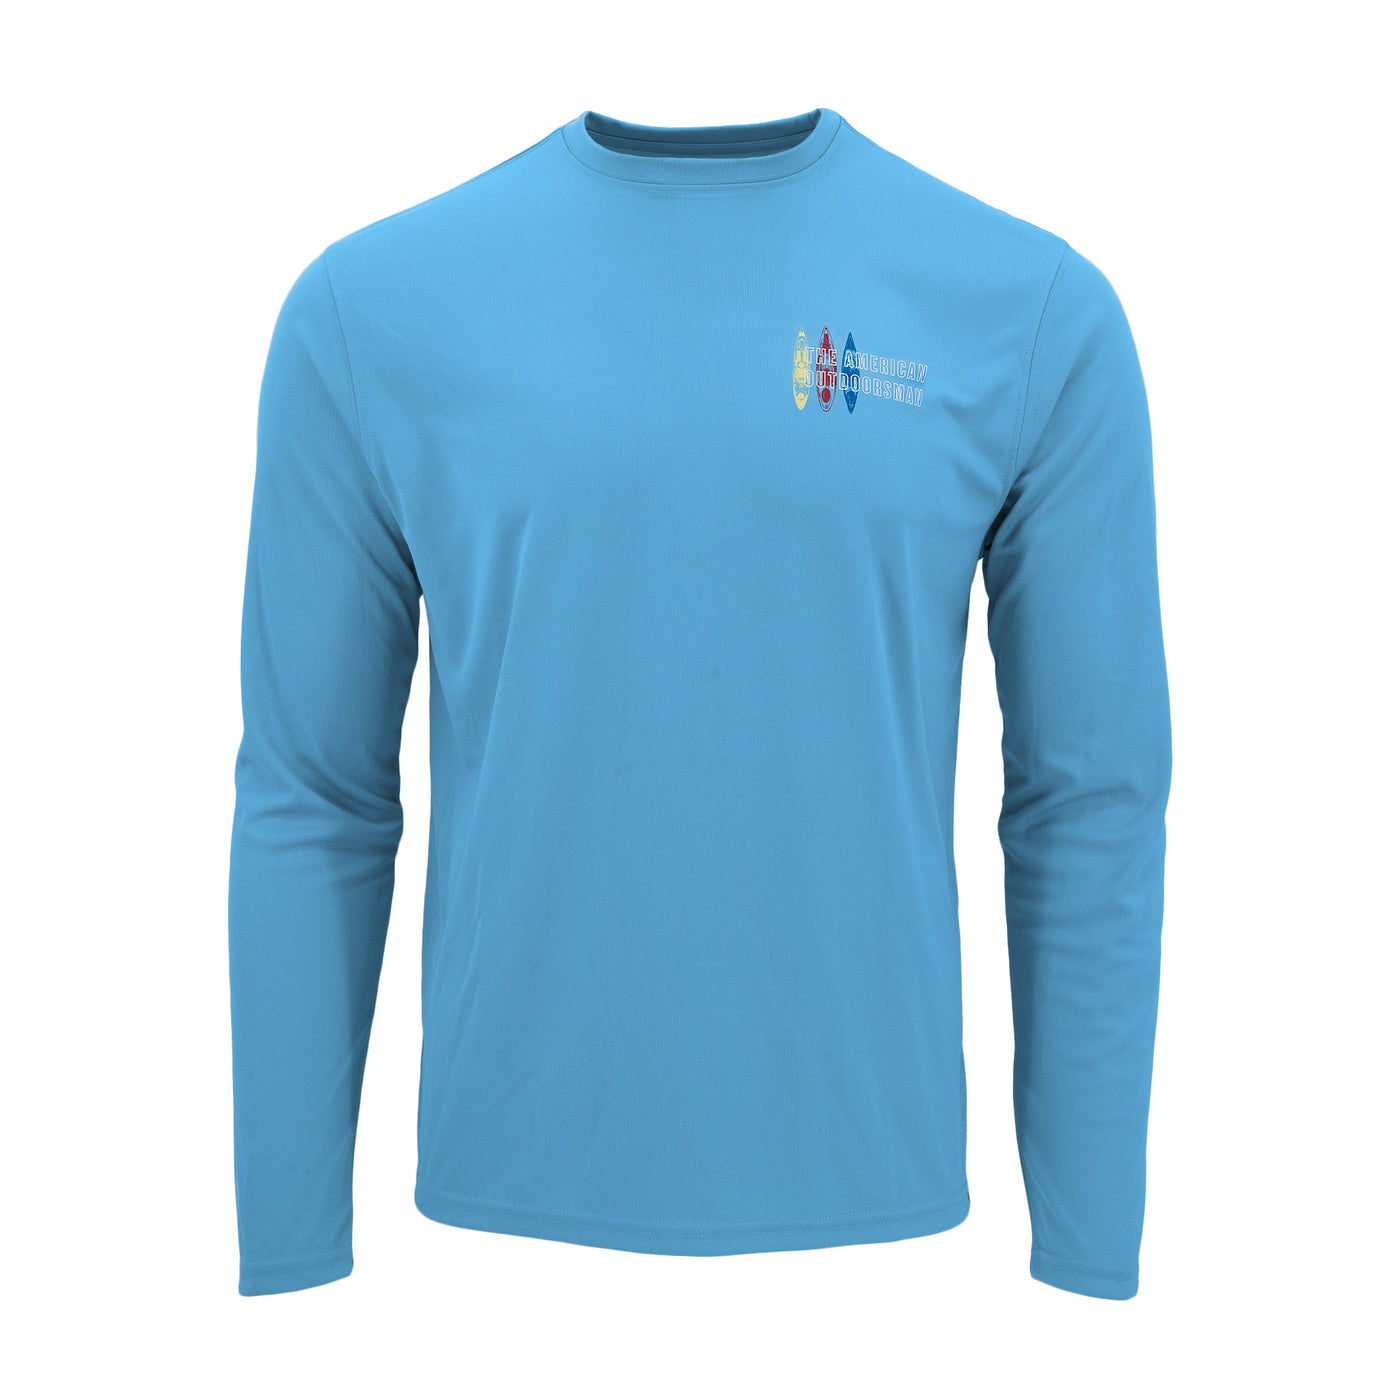 Long sleeve UPF protection 50 sun tee shirt #color_kayak-ethereal-blue